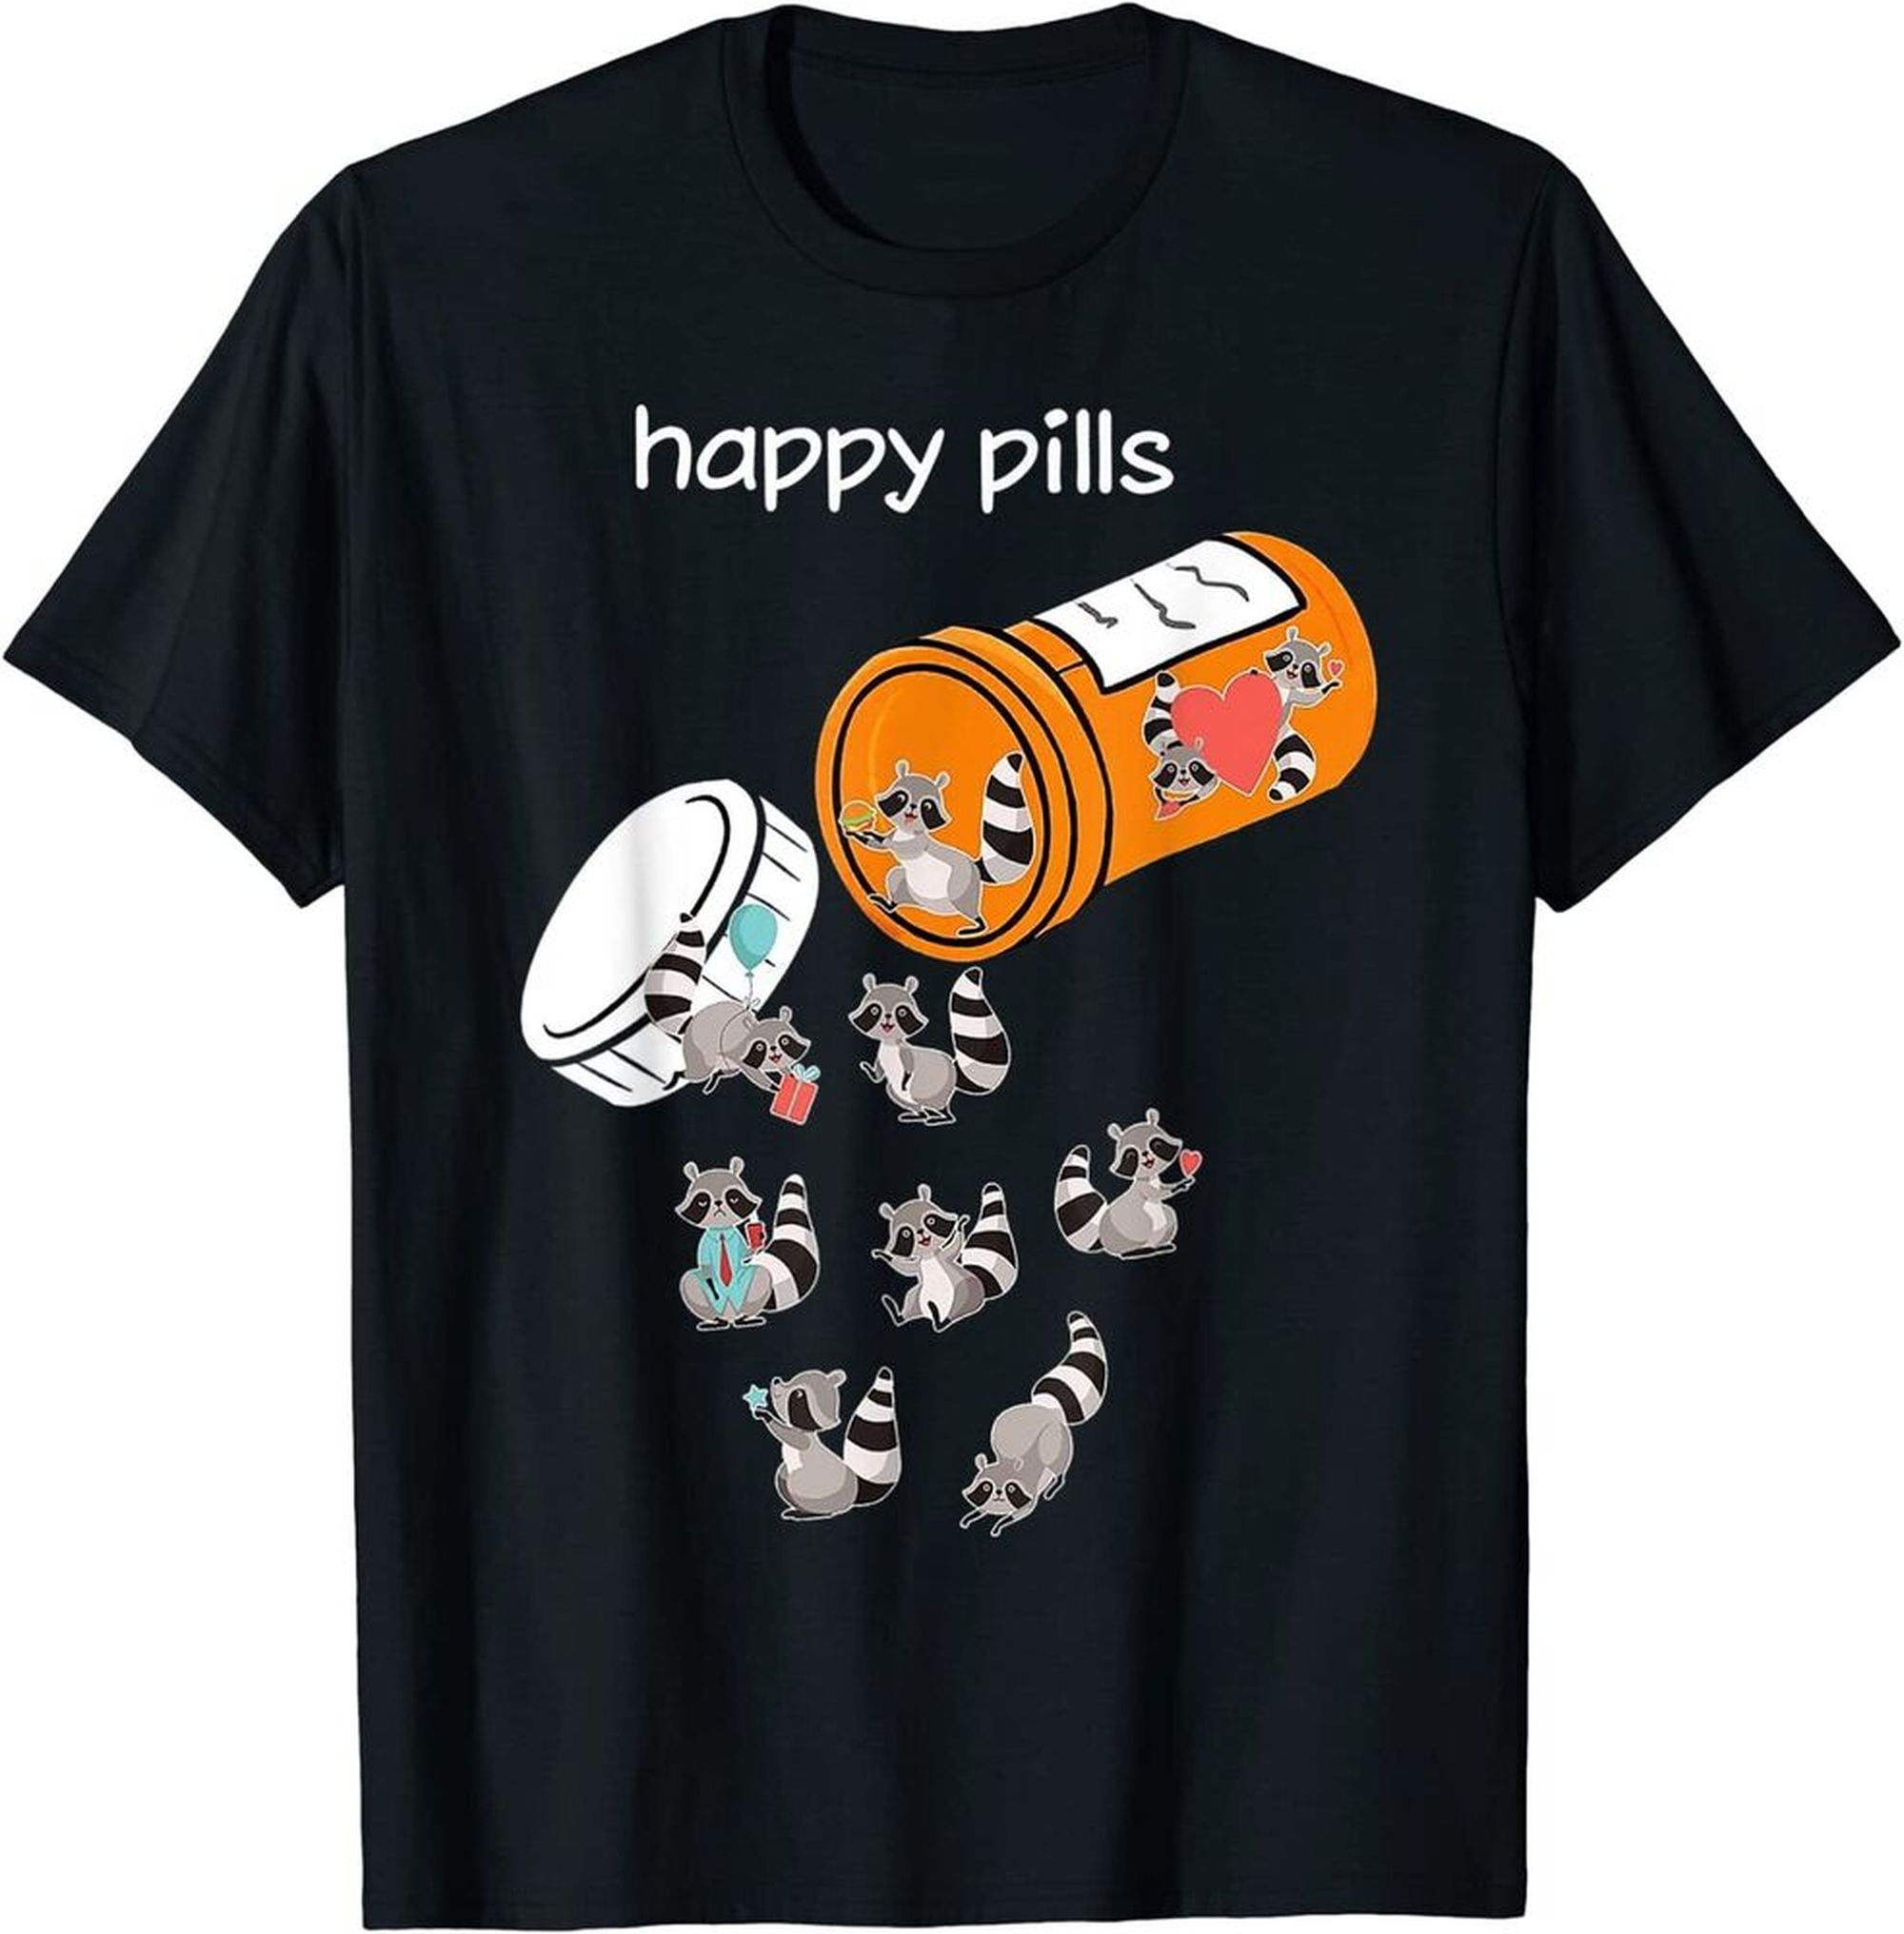 Joyful Raccoon T-Shirt: Delightful Wildlife Print to Share Happiness ...